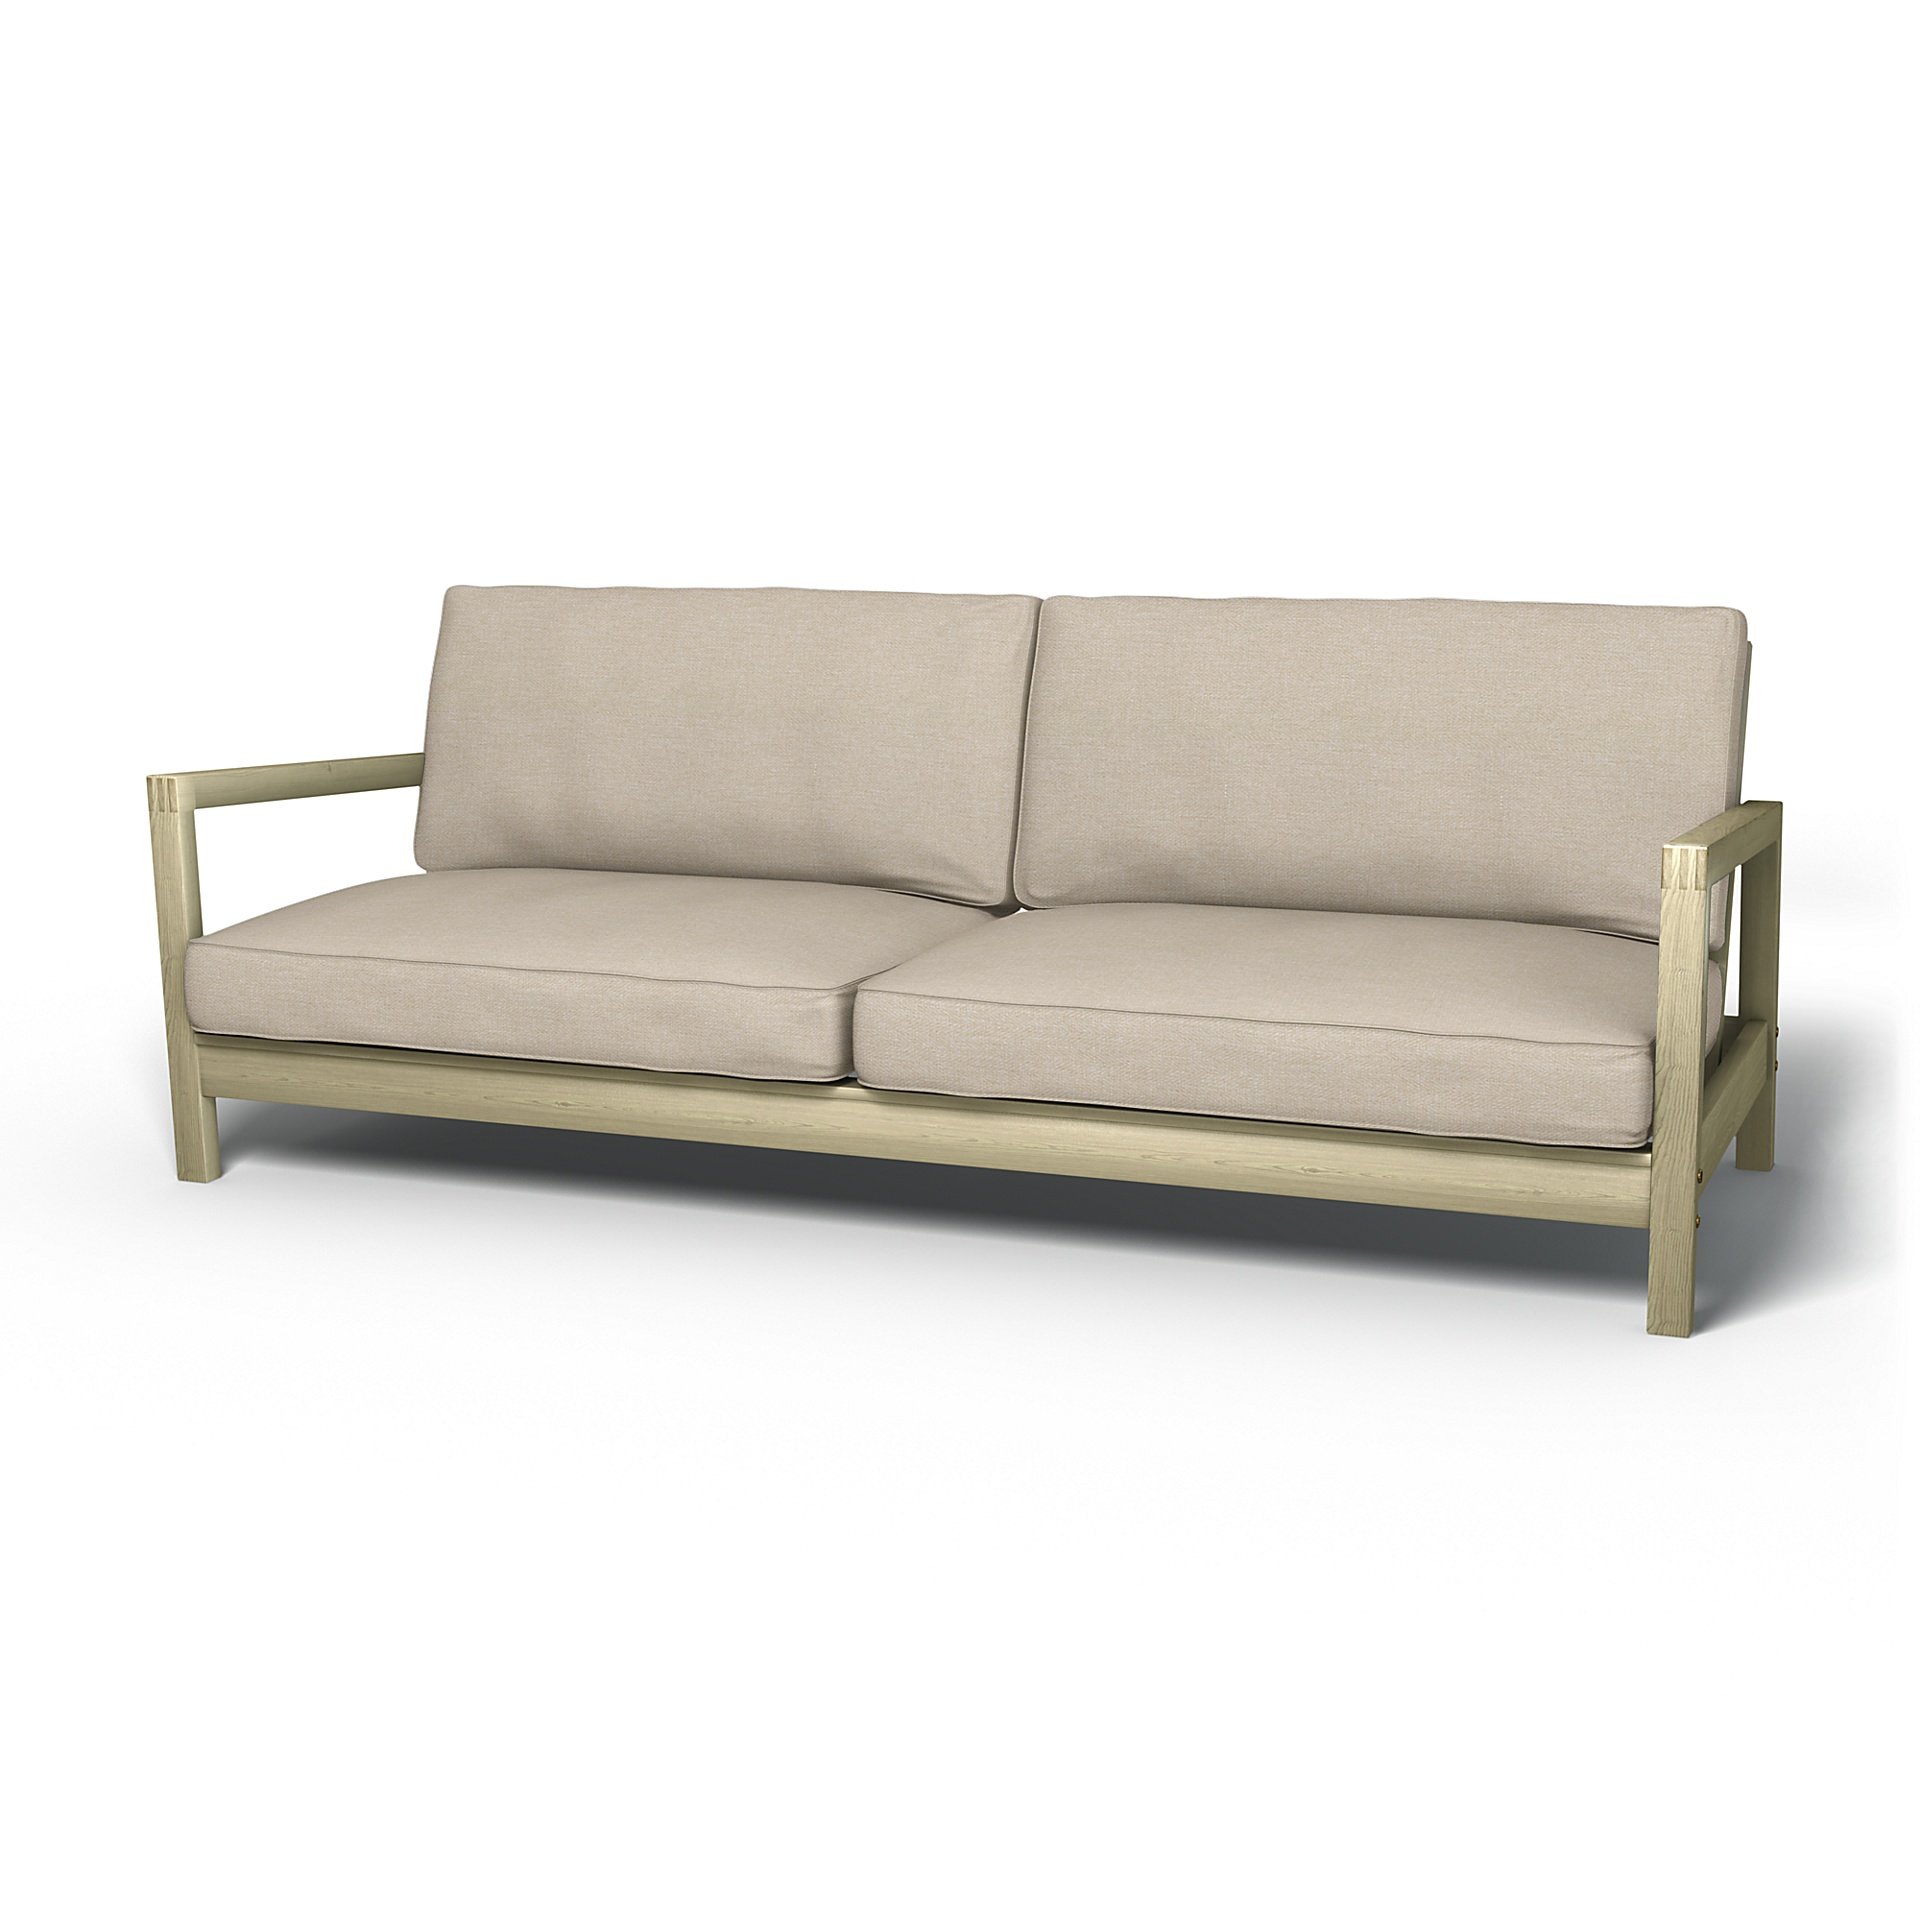 IKEA - Lillberg Sofa Bed Cover, Natural, Boucle & Texture - Bemz